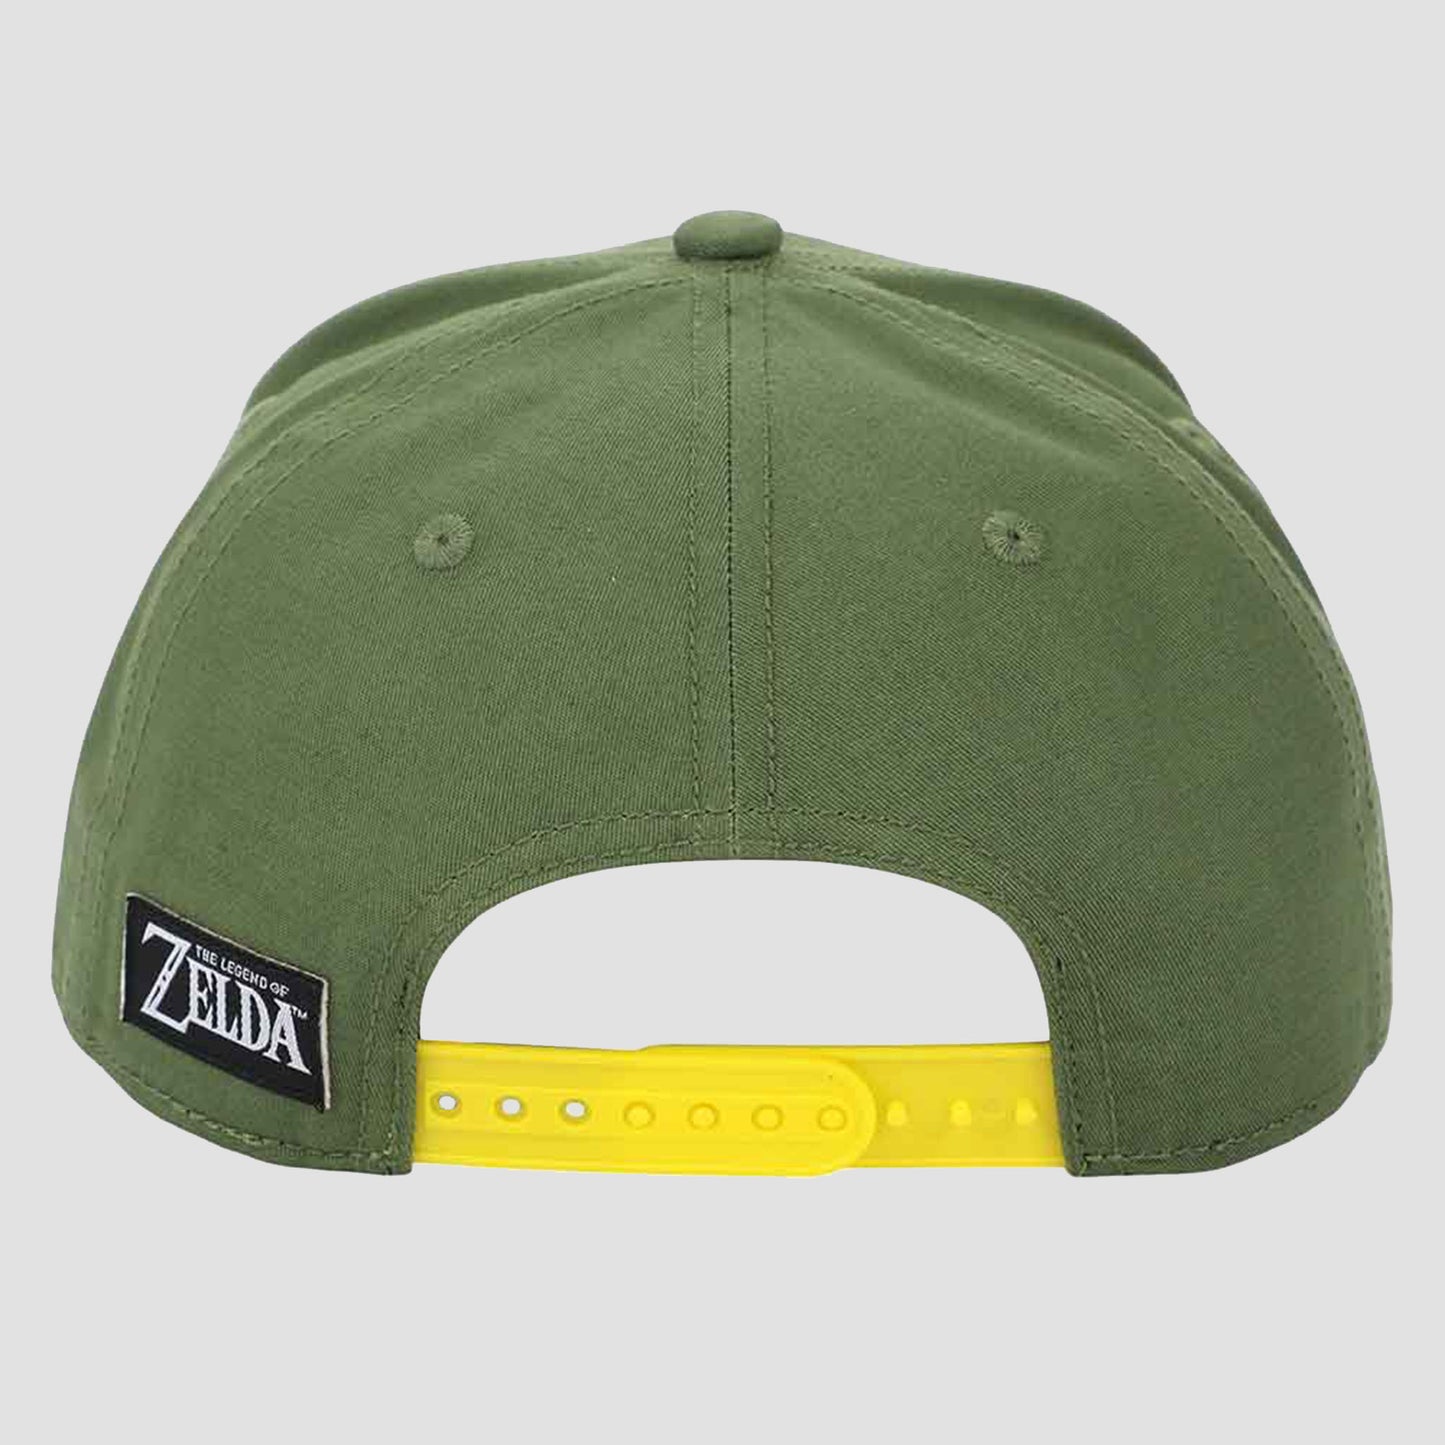 Load image into Gallery viewer, Hyrule Crest (Legend of Zelda) Green Embroidered Precurve Hat
